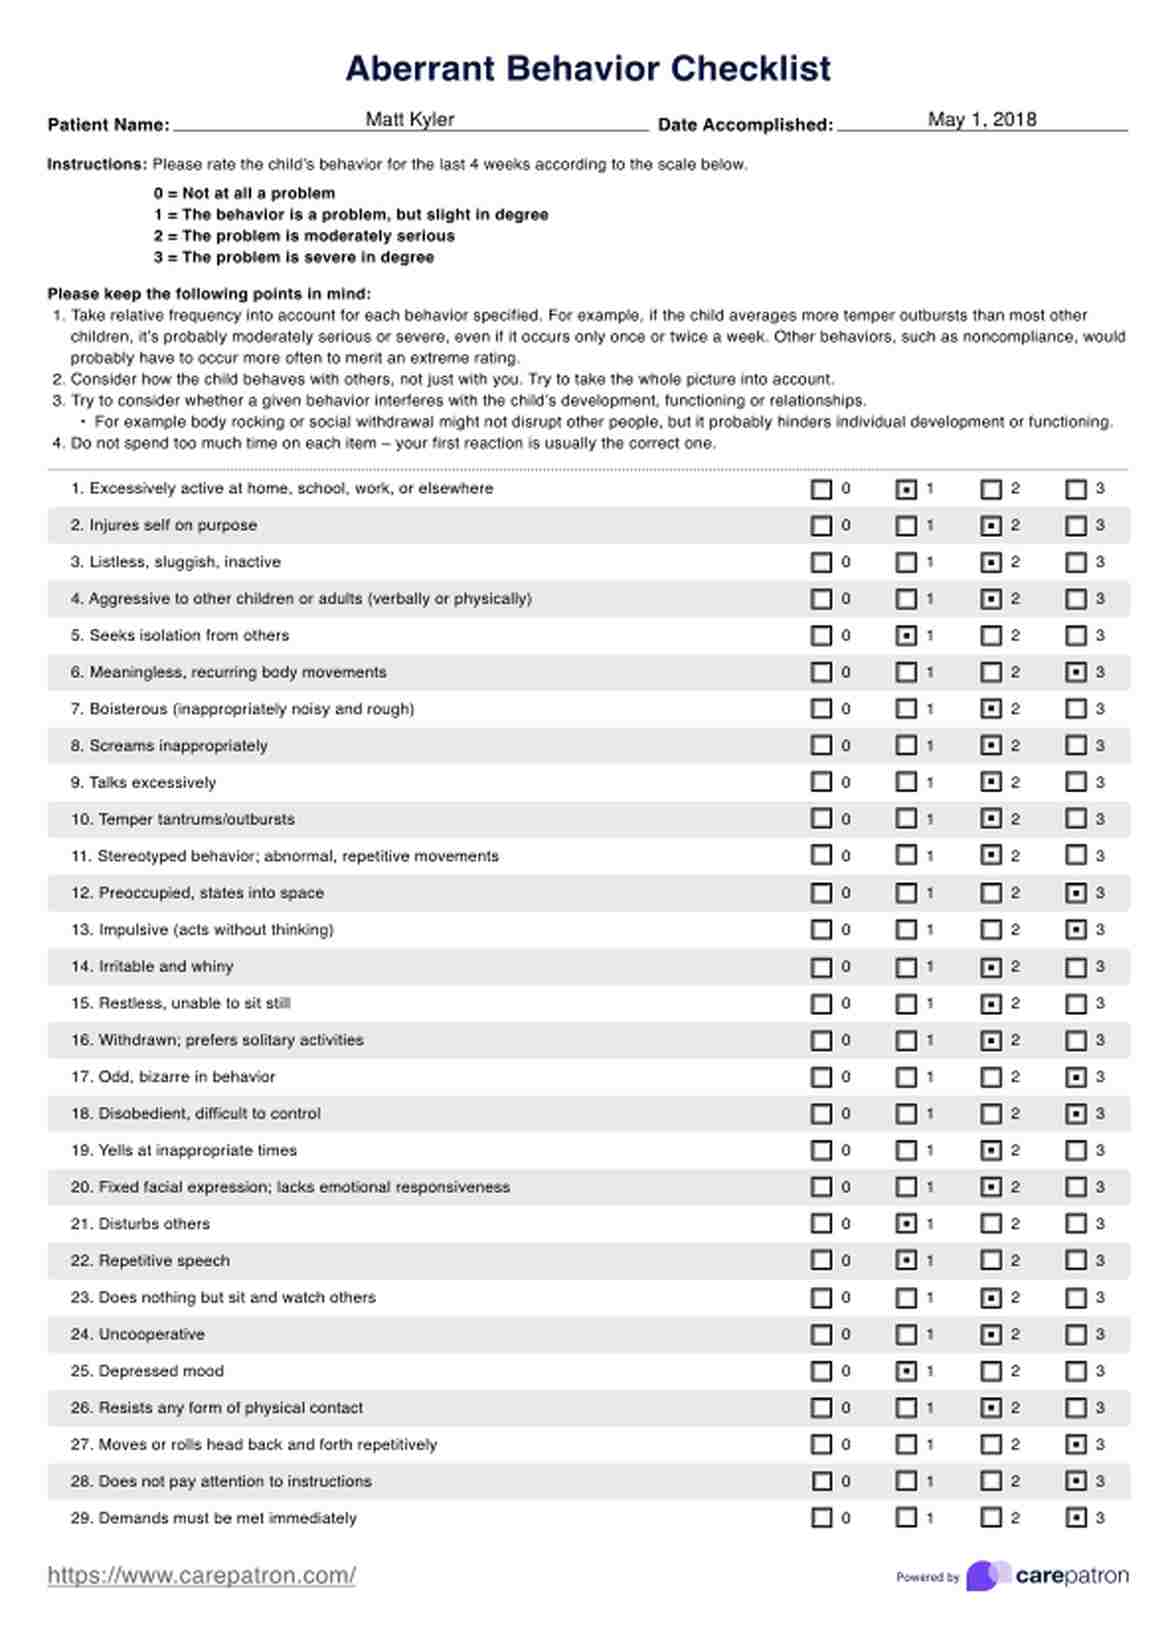 Aberrant Behavior Checklist PDF Example